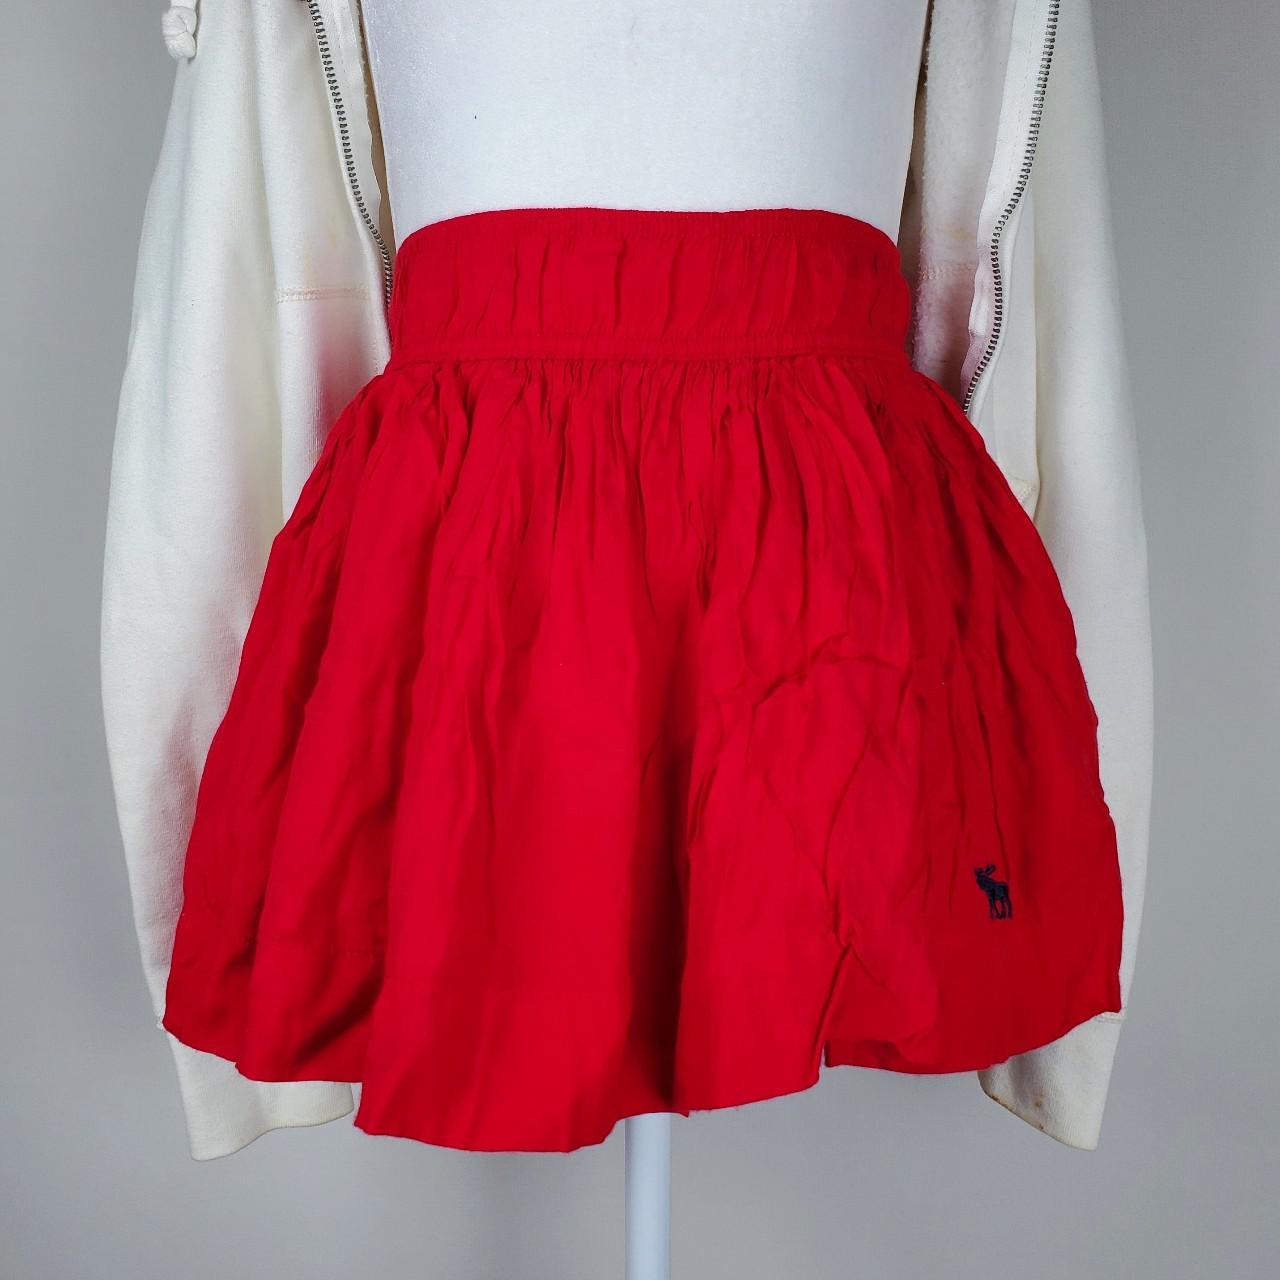 Product Image 3 - Red Miniskirt | Red Schoolgirl